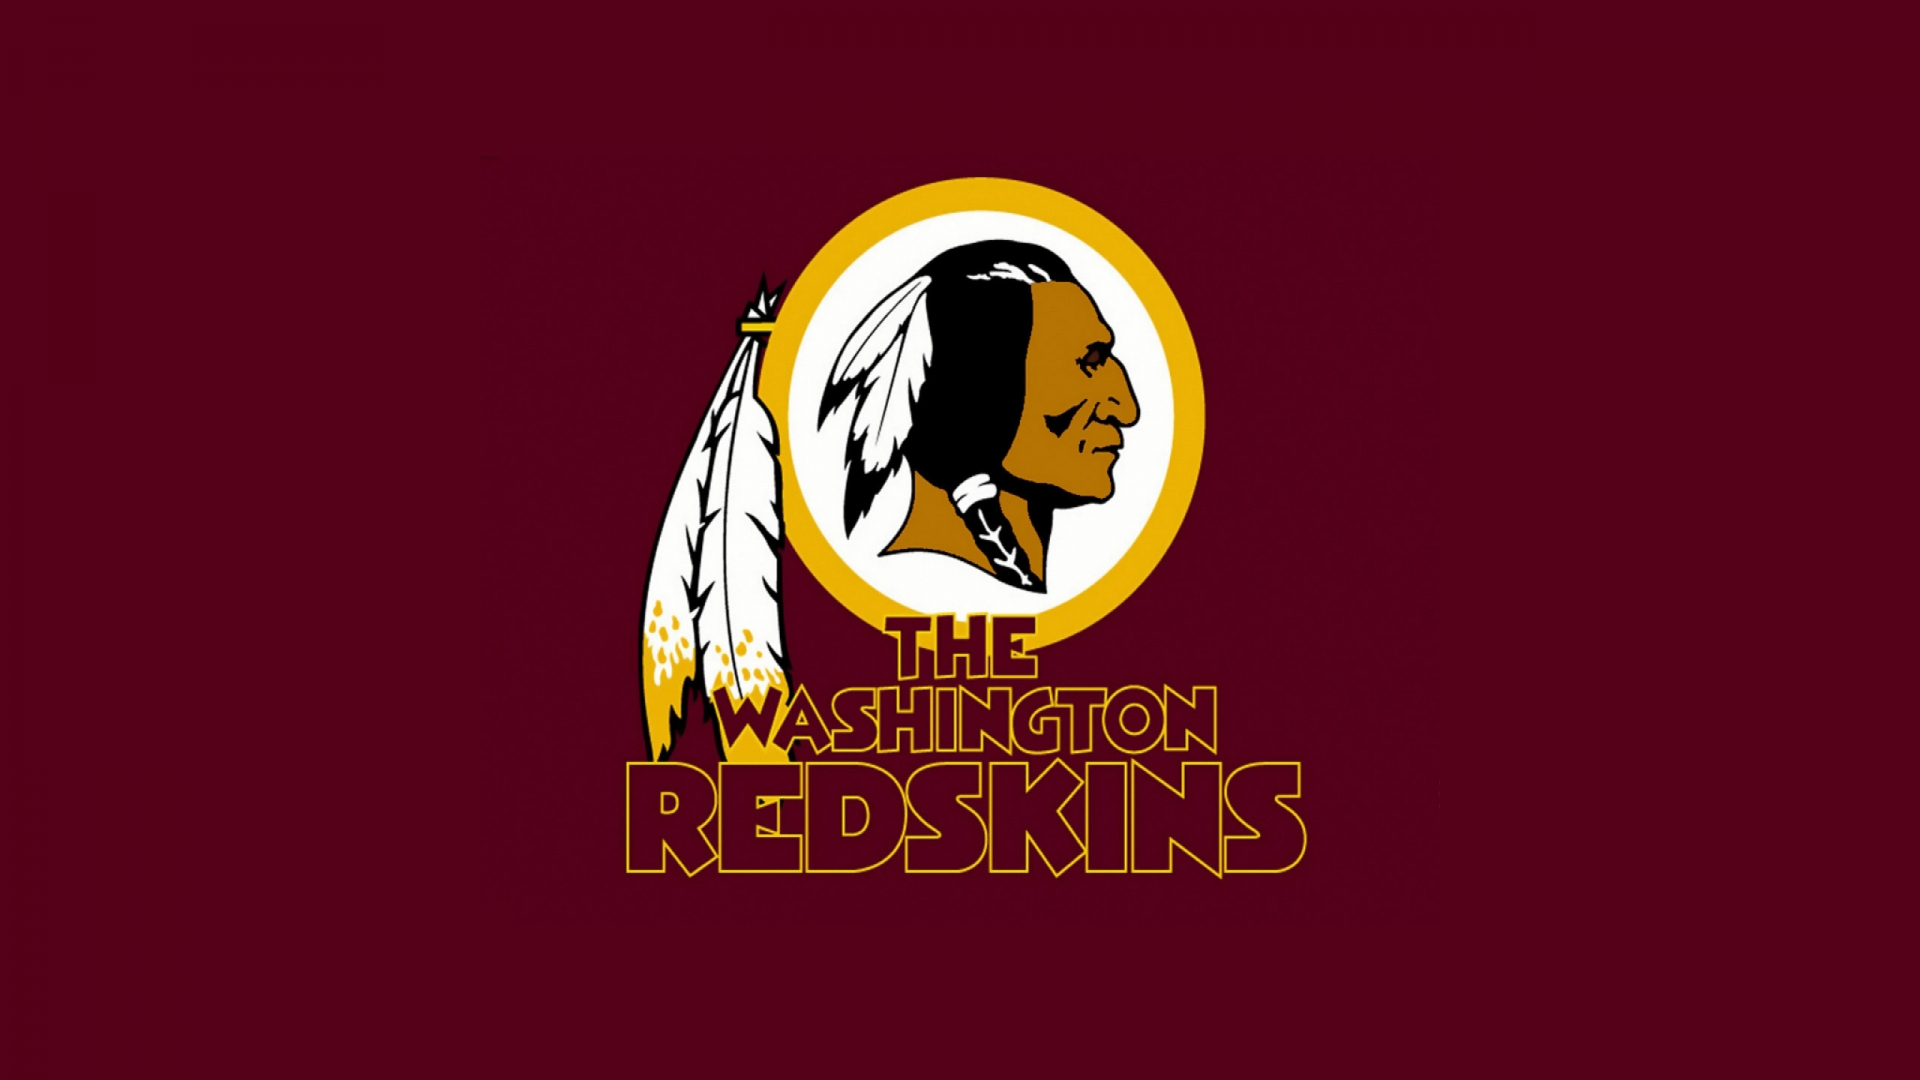 Washington Redskins Logo for 1920 x 1080 HDTV 1080p resolution